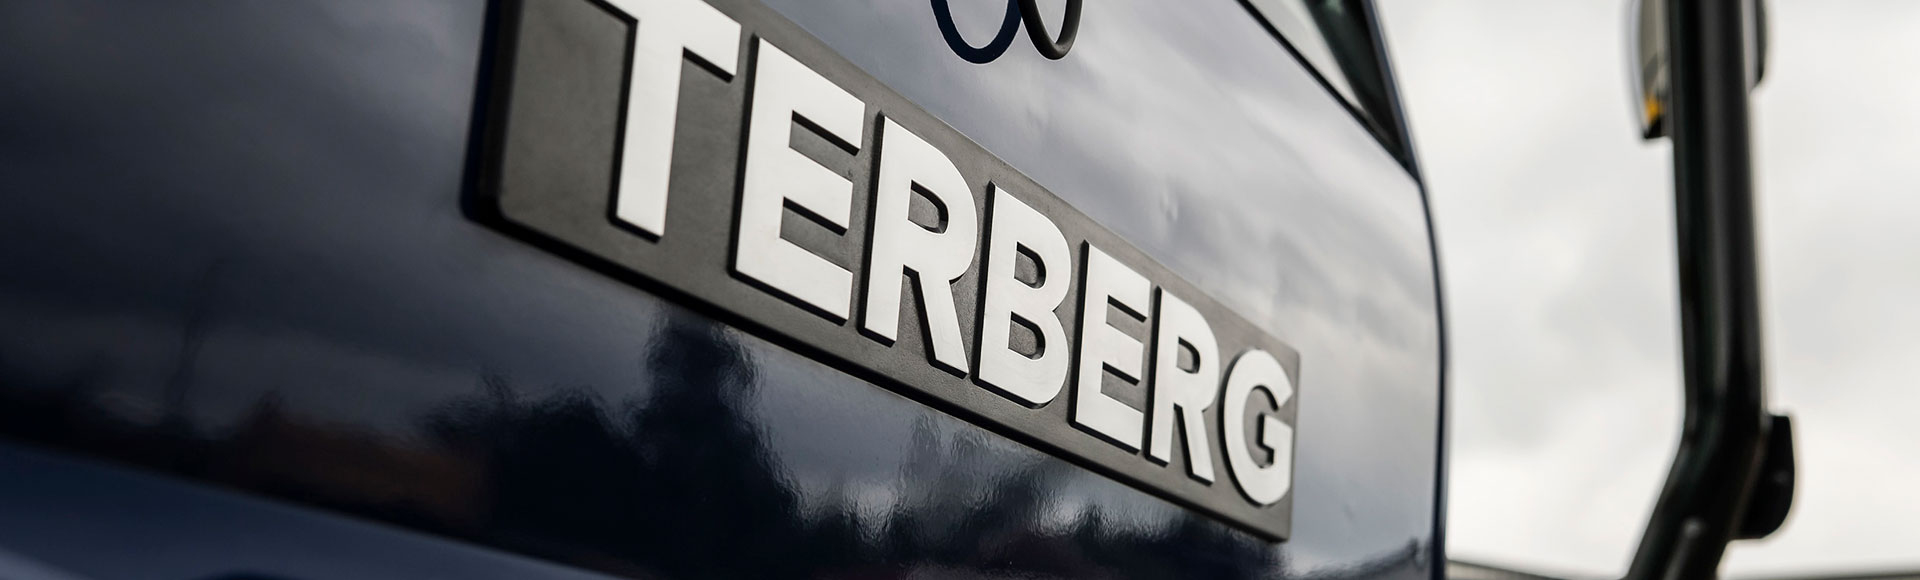 Terberg trækker fra med ny terminaltraktor